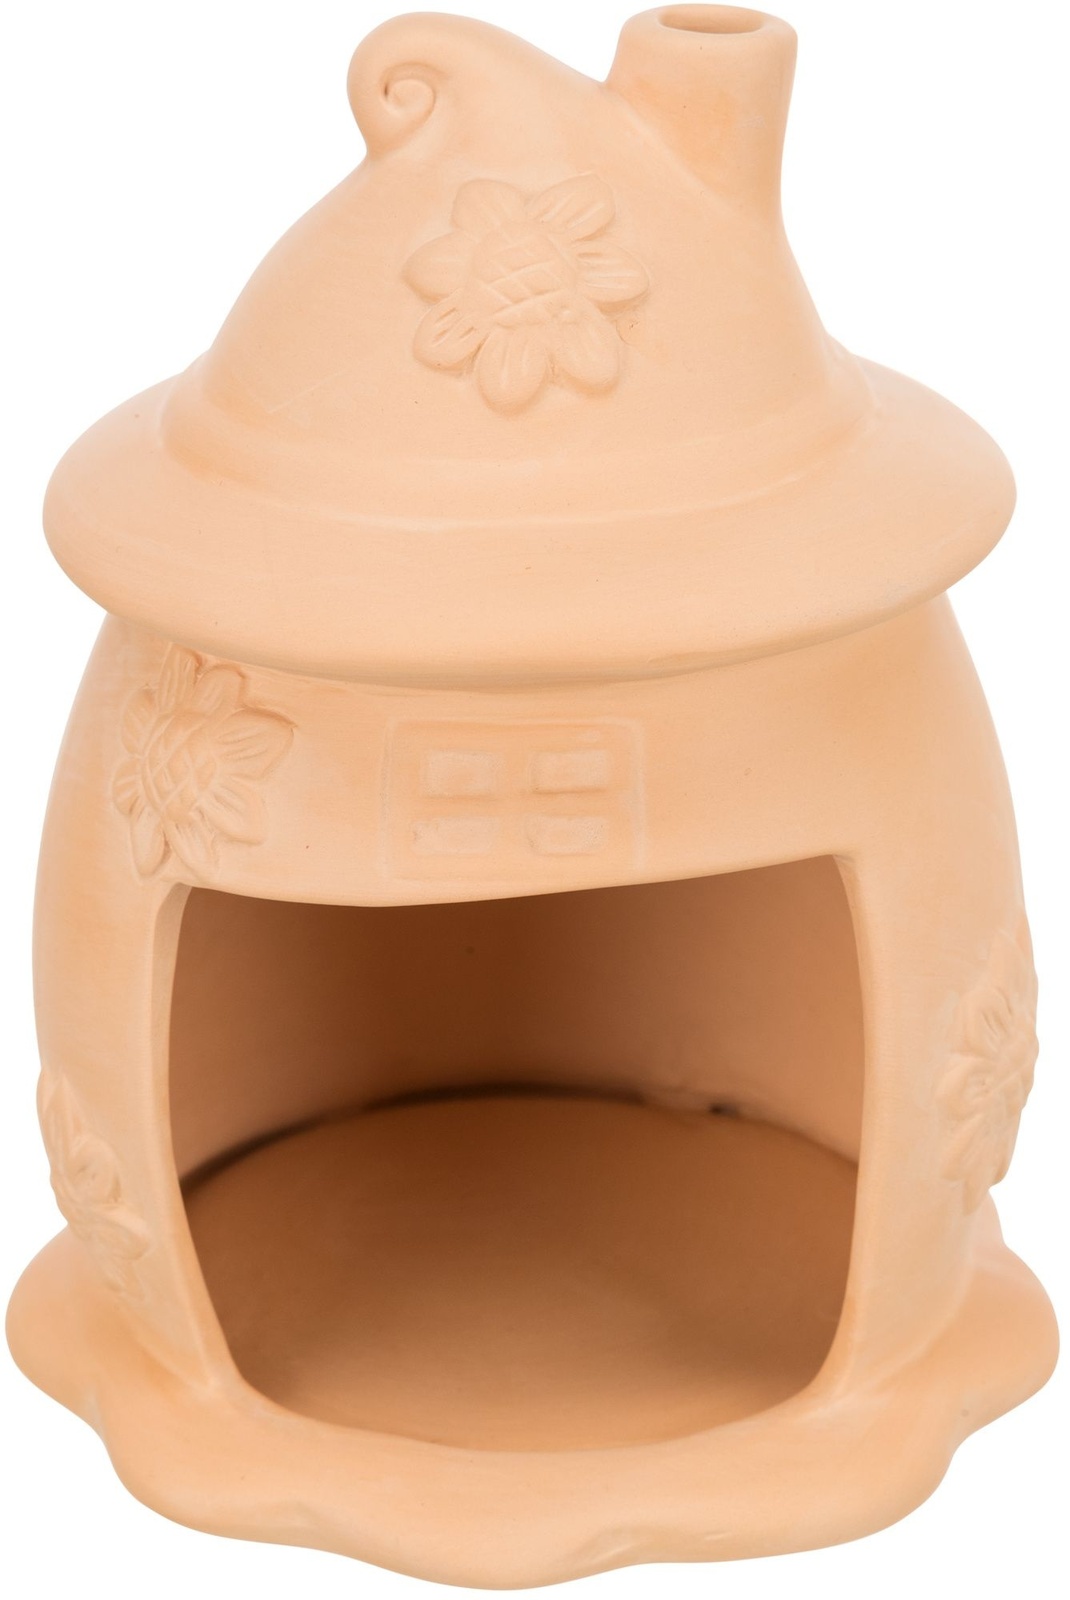 Trixie Trixie домик для мышей, керамика, терракотовый (330 г) trixie trixie домик для мышей керамика терракотовый 330 г